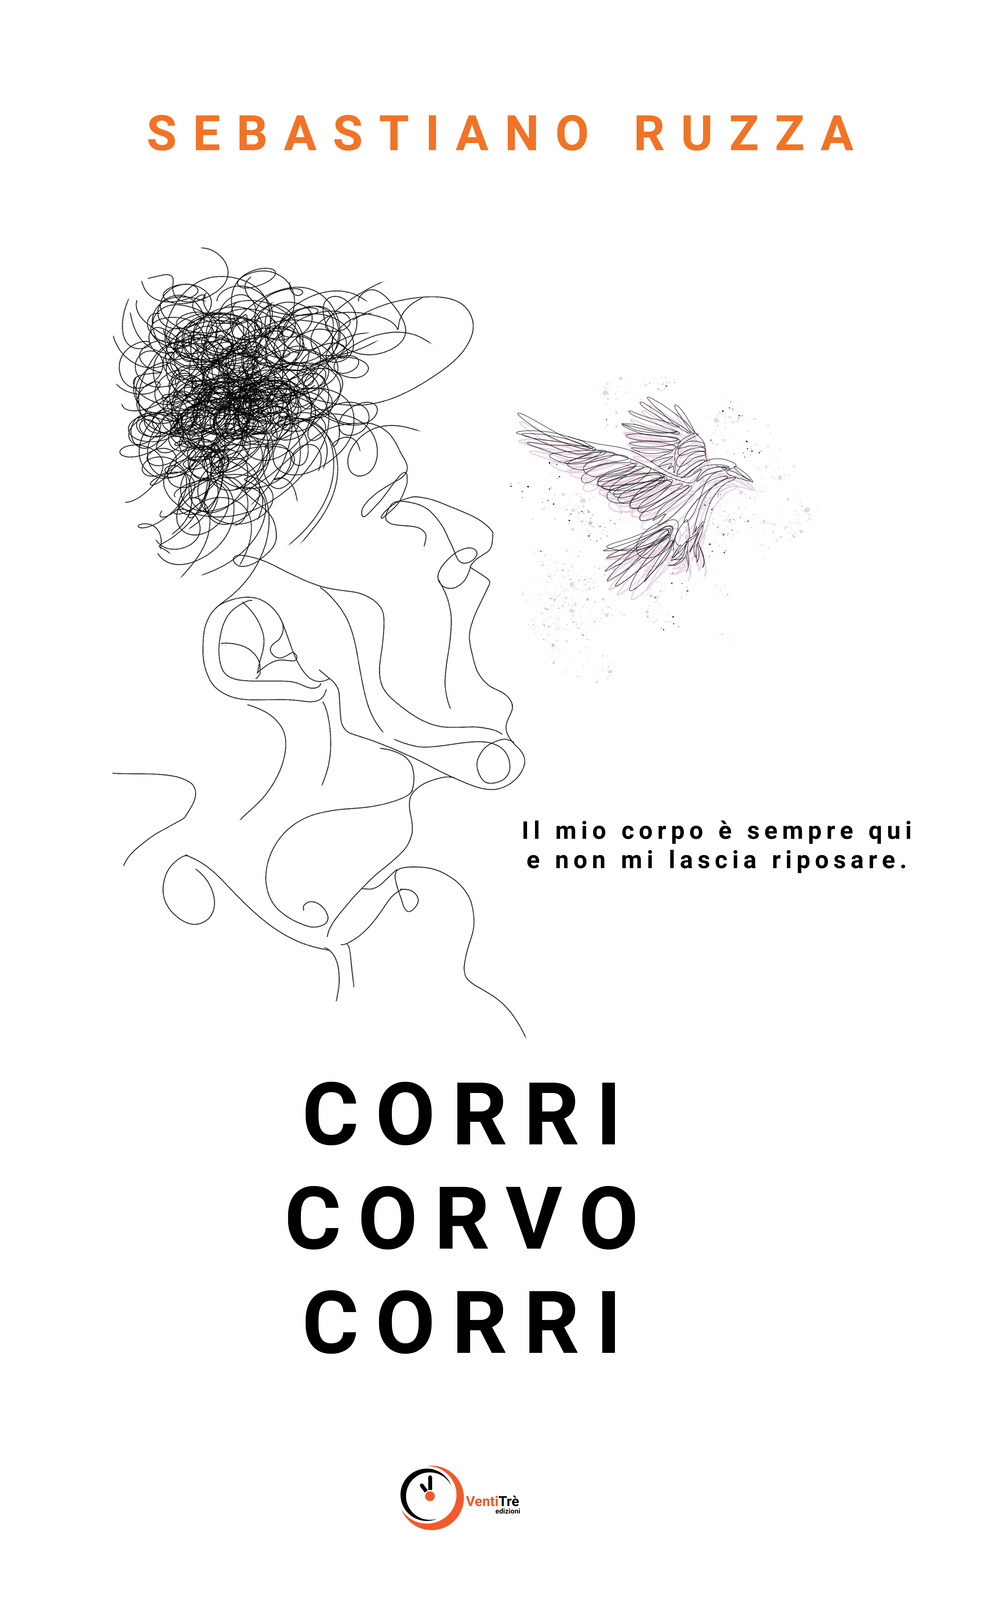 Image of Corri corvo corri